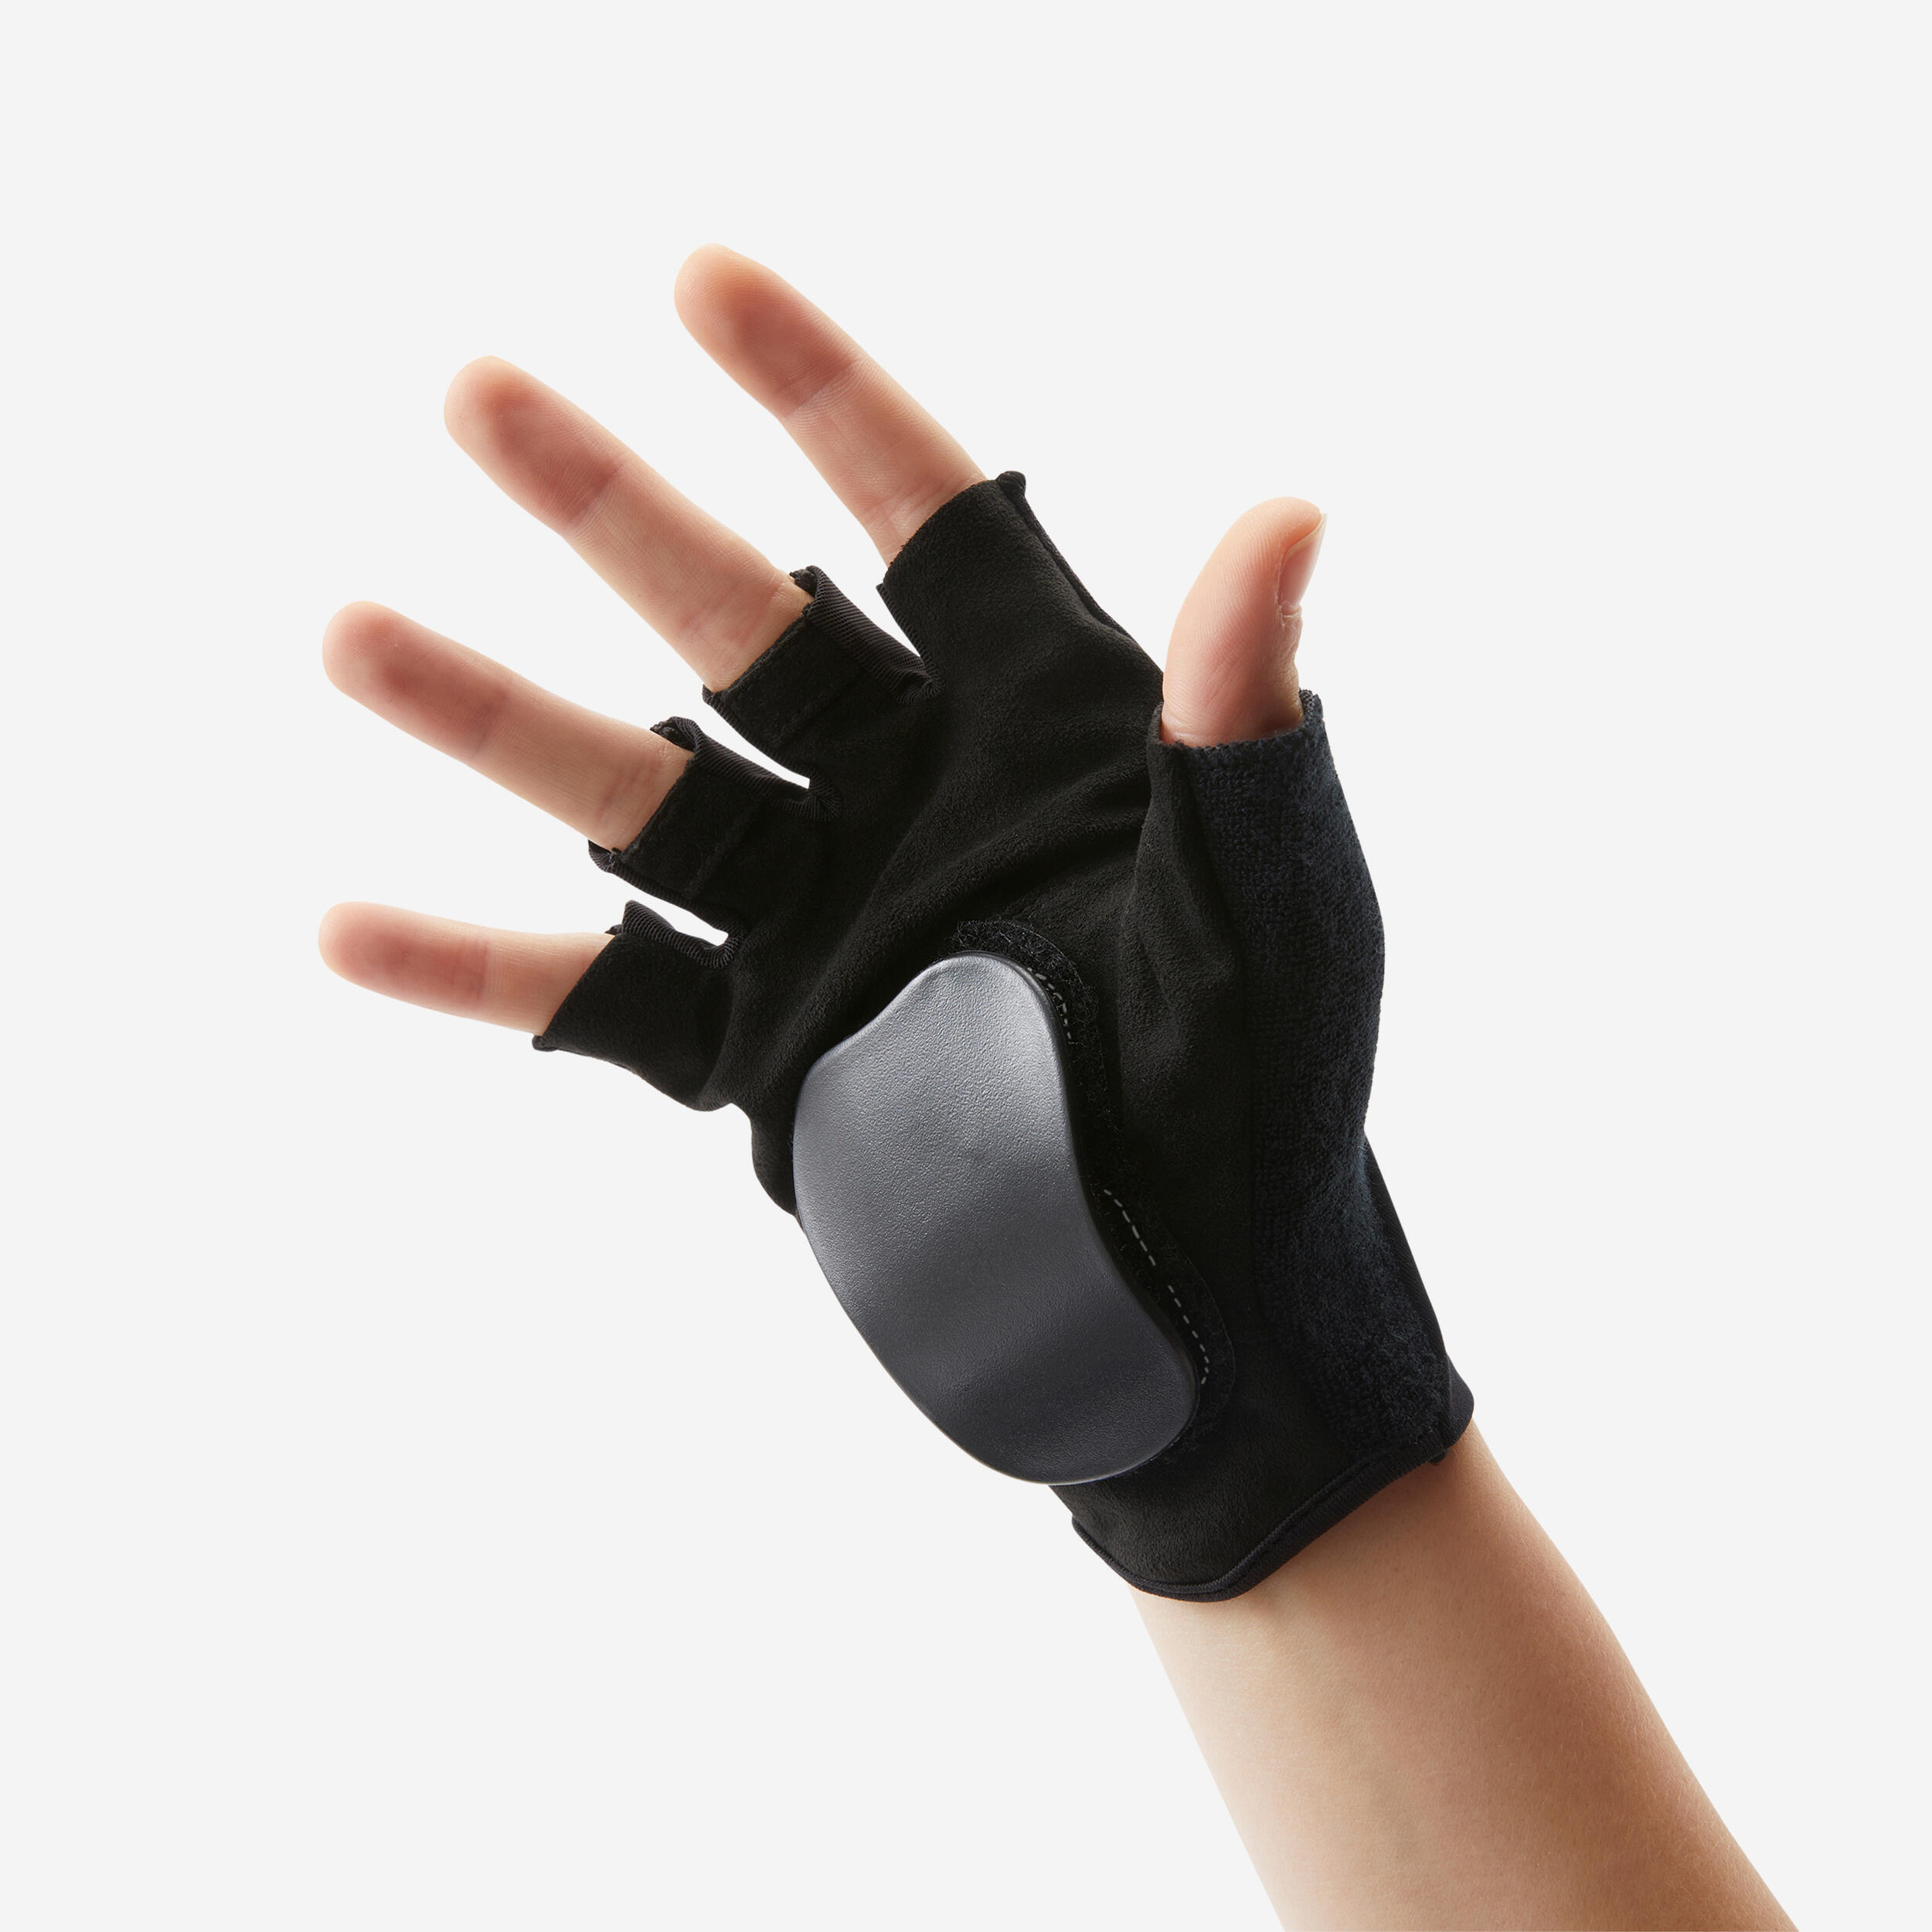 OXELO Protective Roller Gloves MF900 - Black